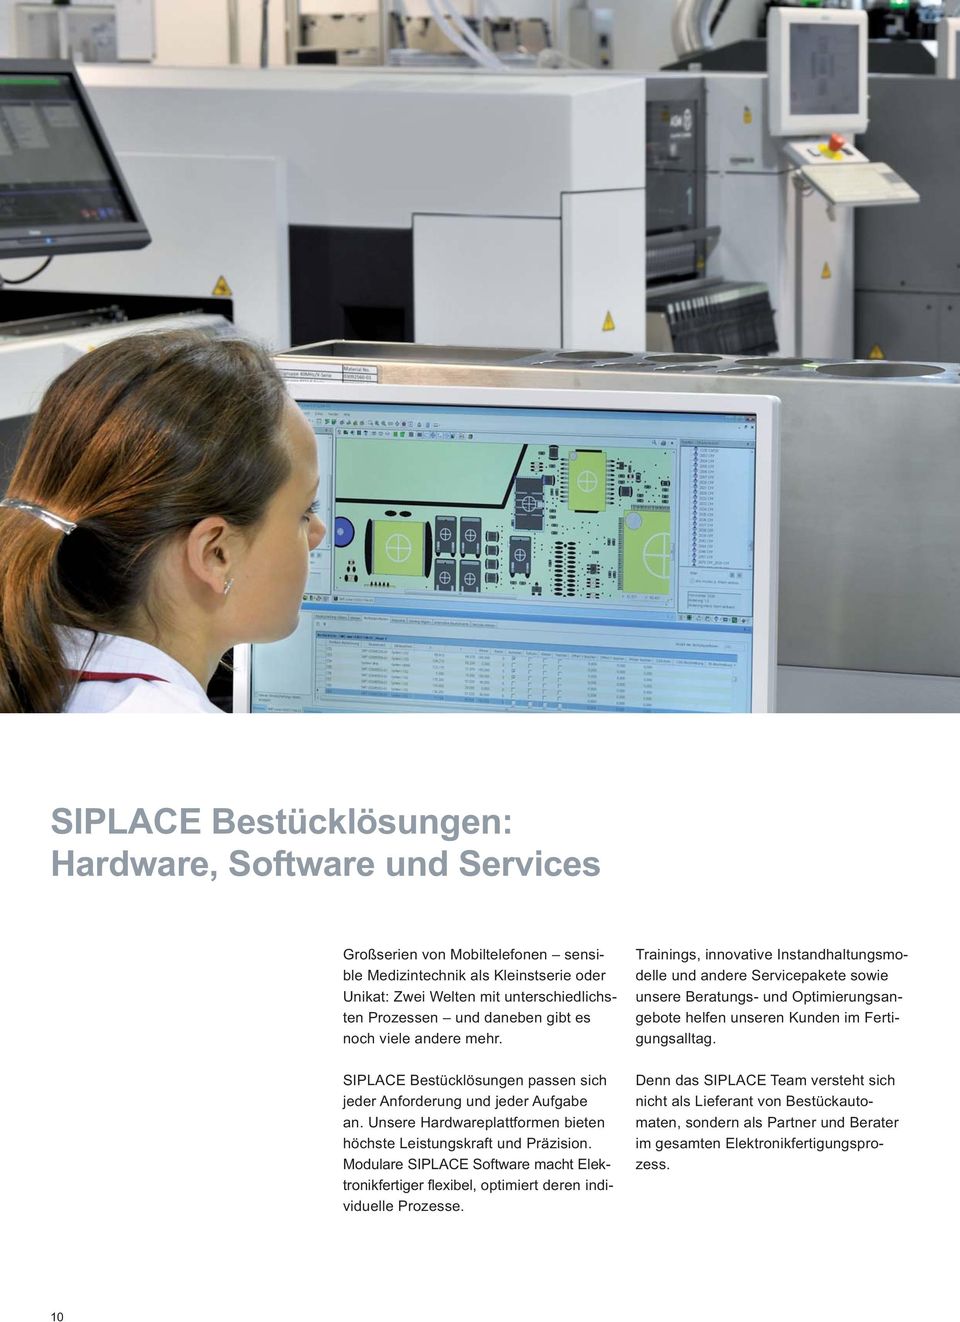 Modulare SIPLACE Software macht Elektronikfertiger flexibel, optimiert deren individuelle Prozesse.